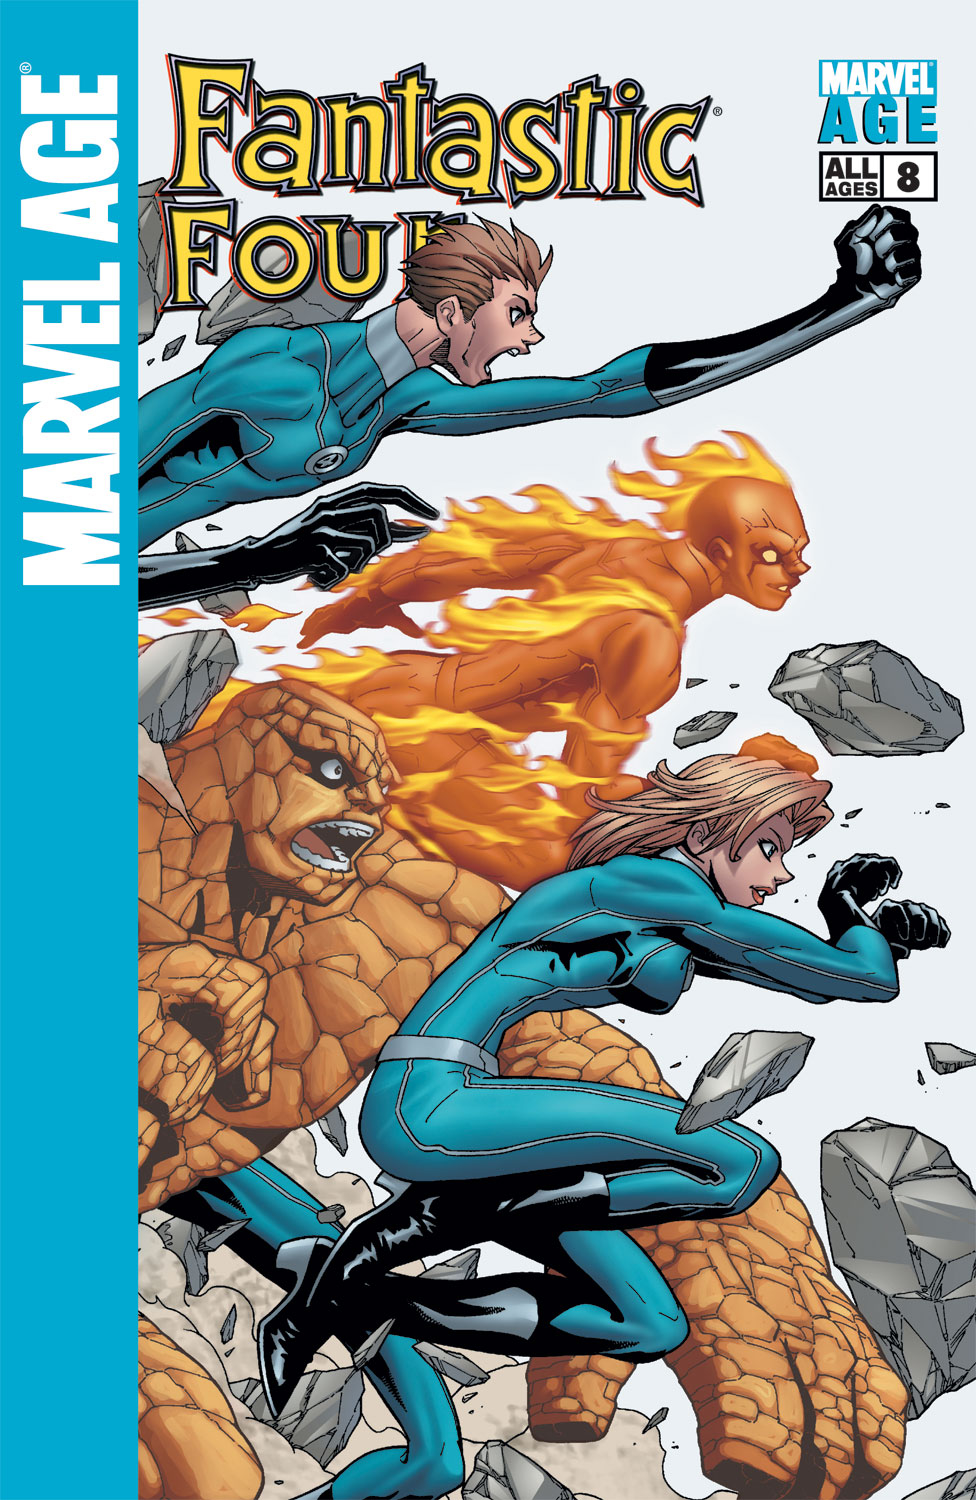 Marvel Age Fantastic Four (2004) #8